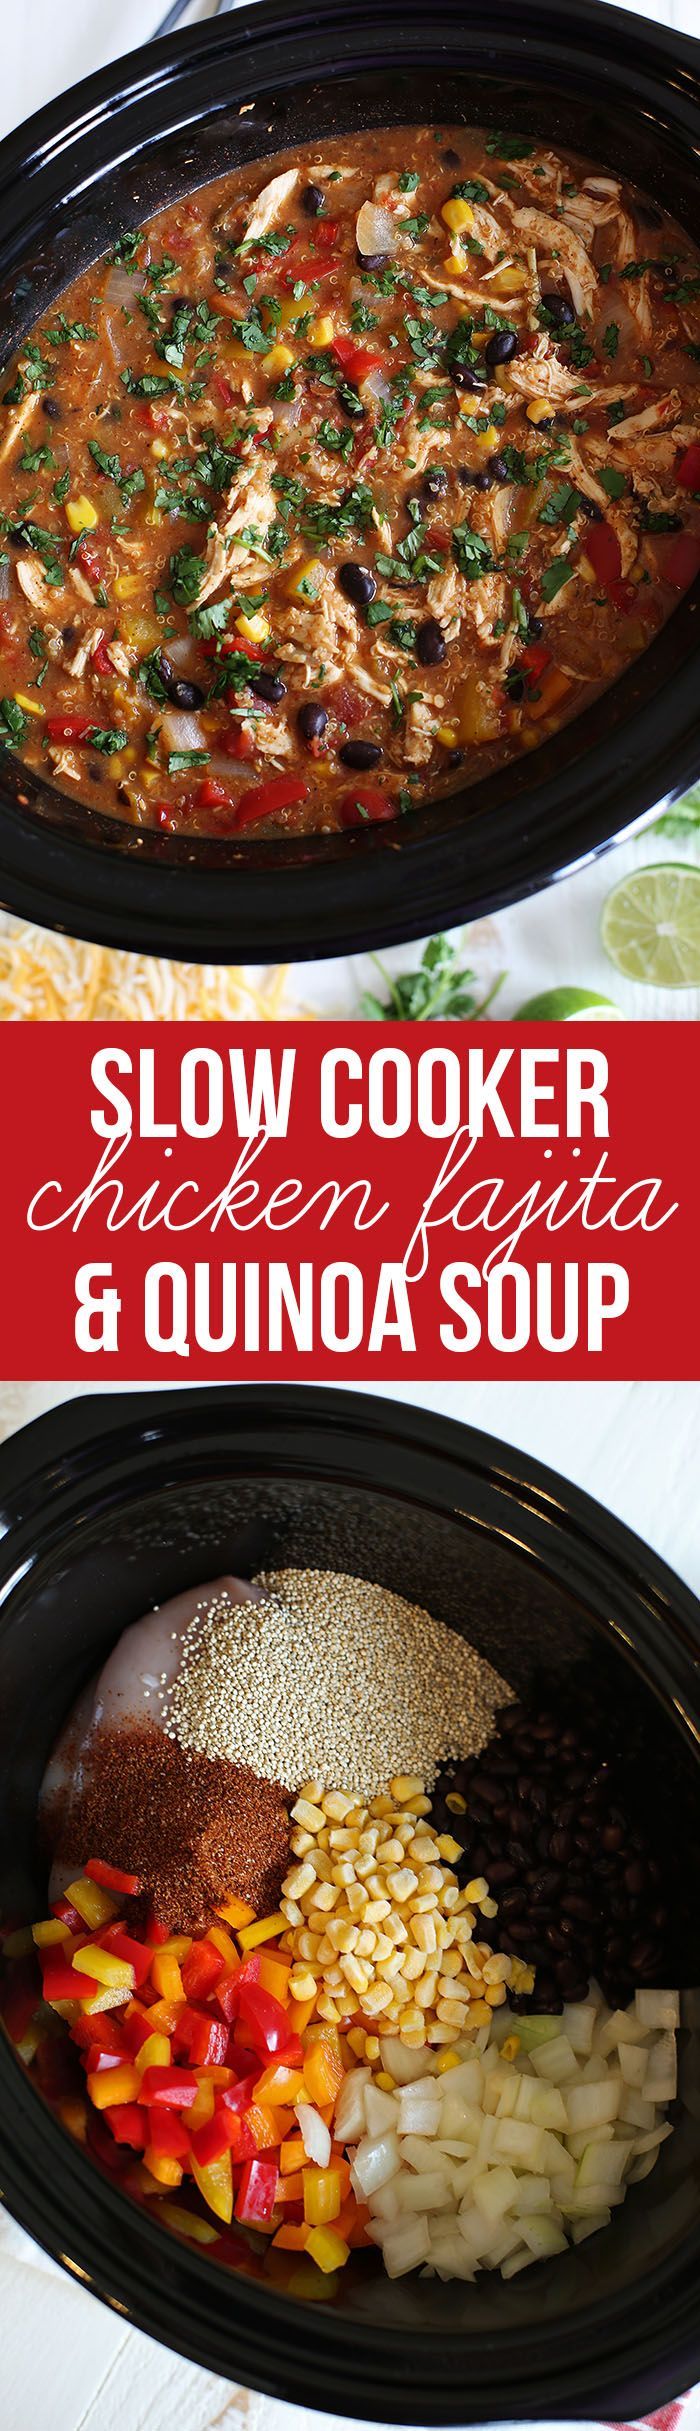 My FAVORITE recipe for Slow Cooker Chicken Fajita & Quinoa Soup that is health